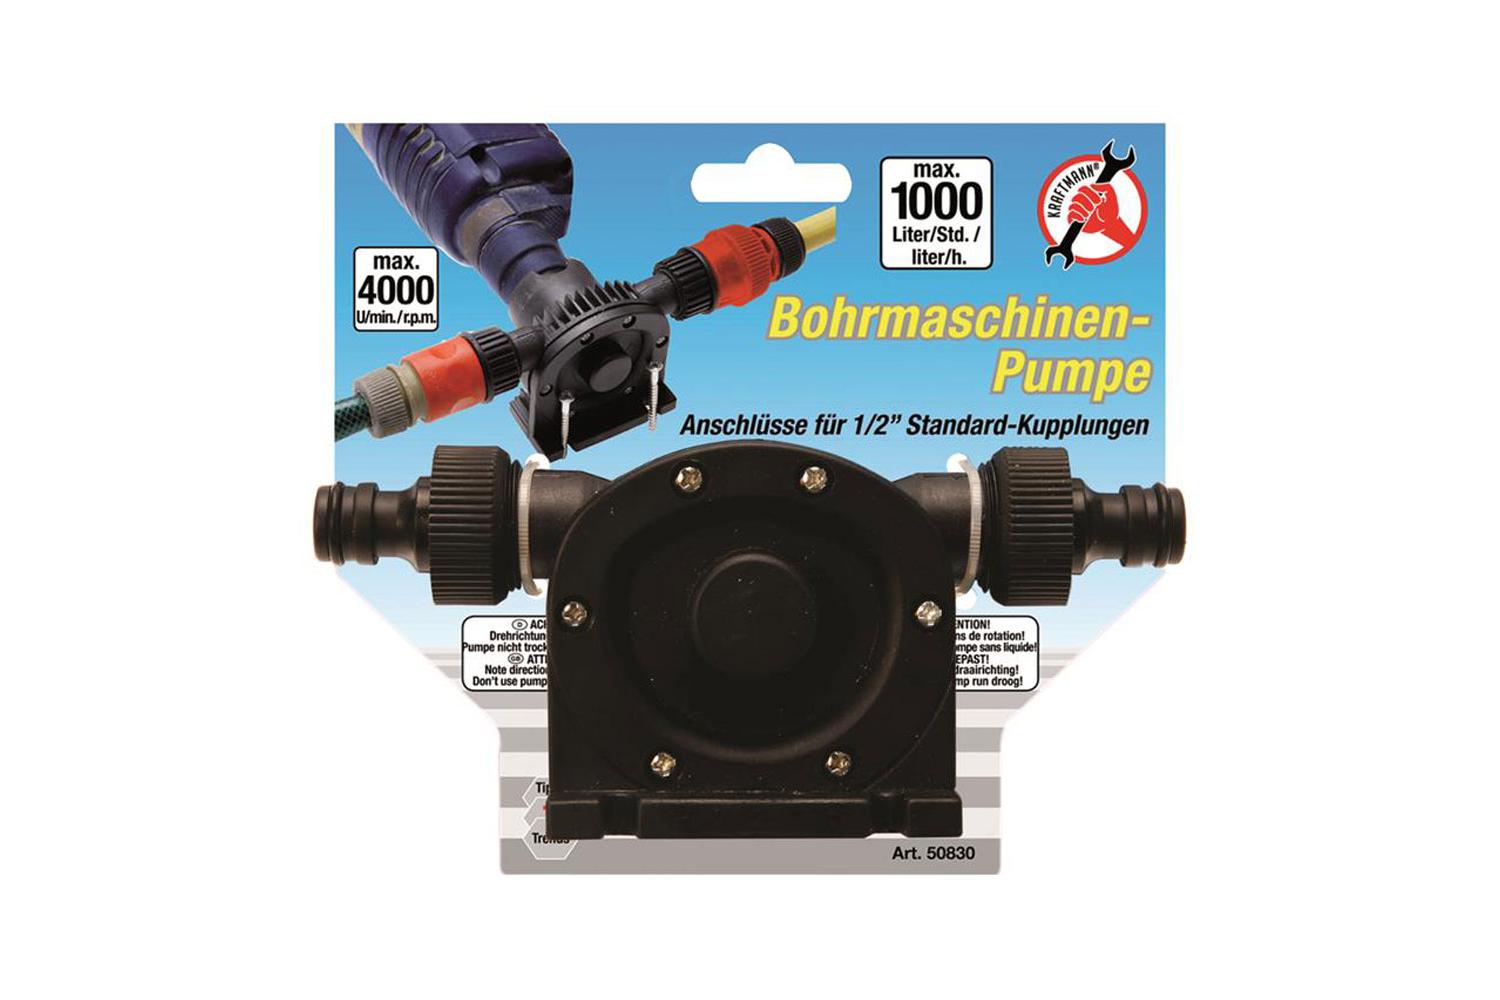 BGS-50830 I Bohrmaschinen-Pumpe